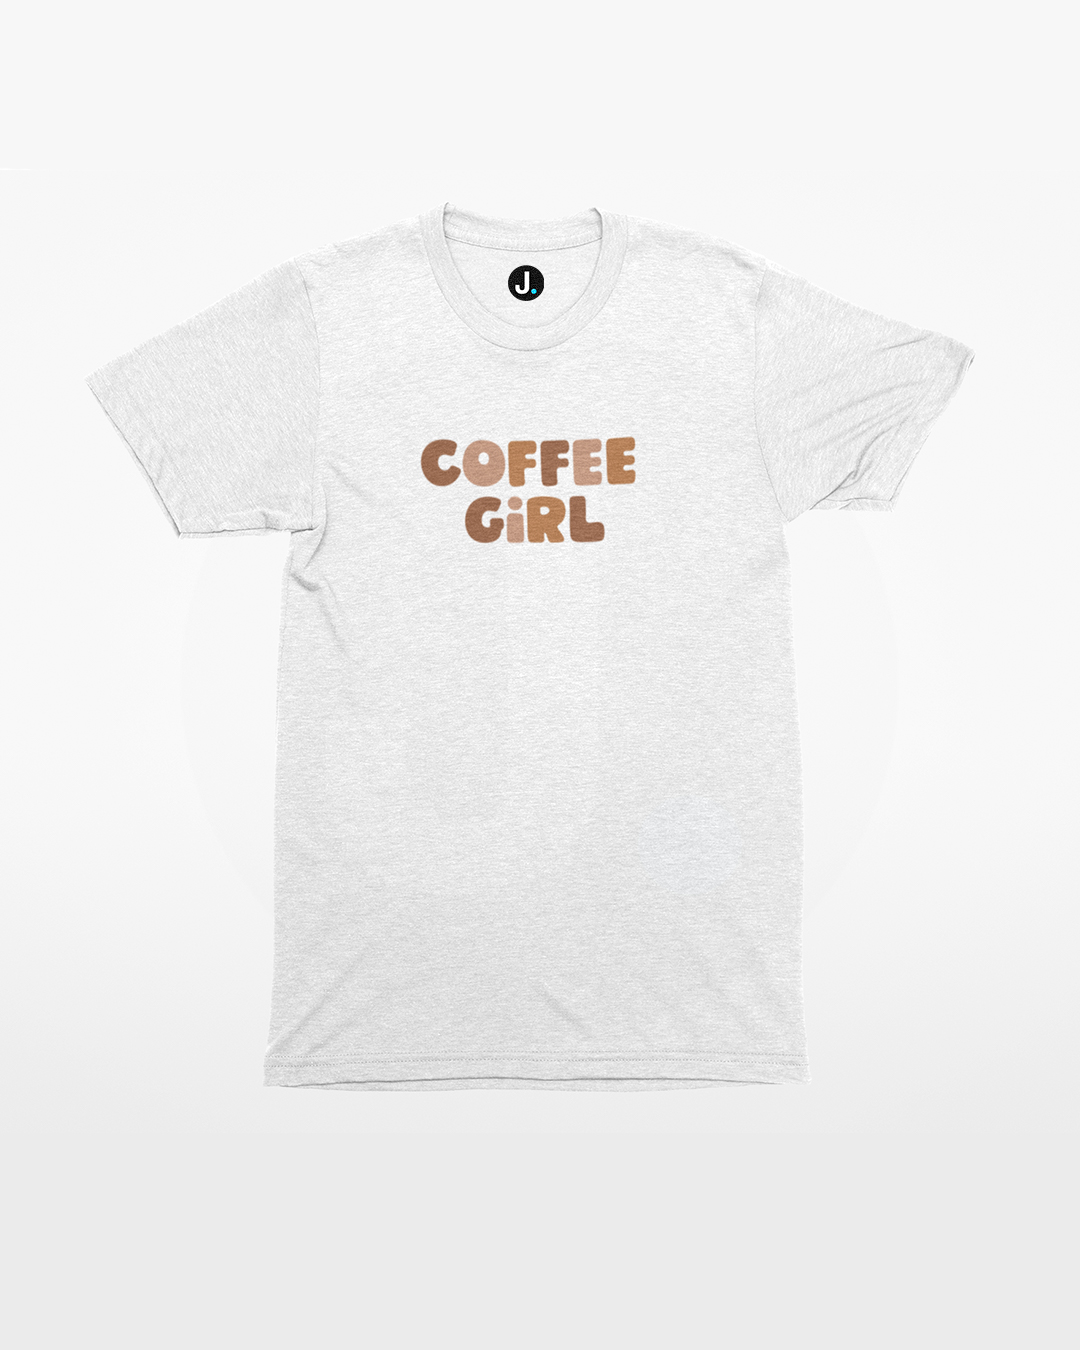 Coffee Girl T-Shirt - Coffee Girl Aesthetic T-Shirts - Coffee Girl Aesthetic T-Shirt